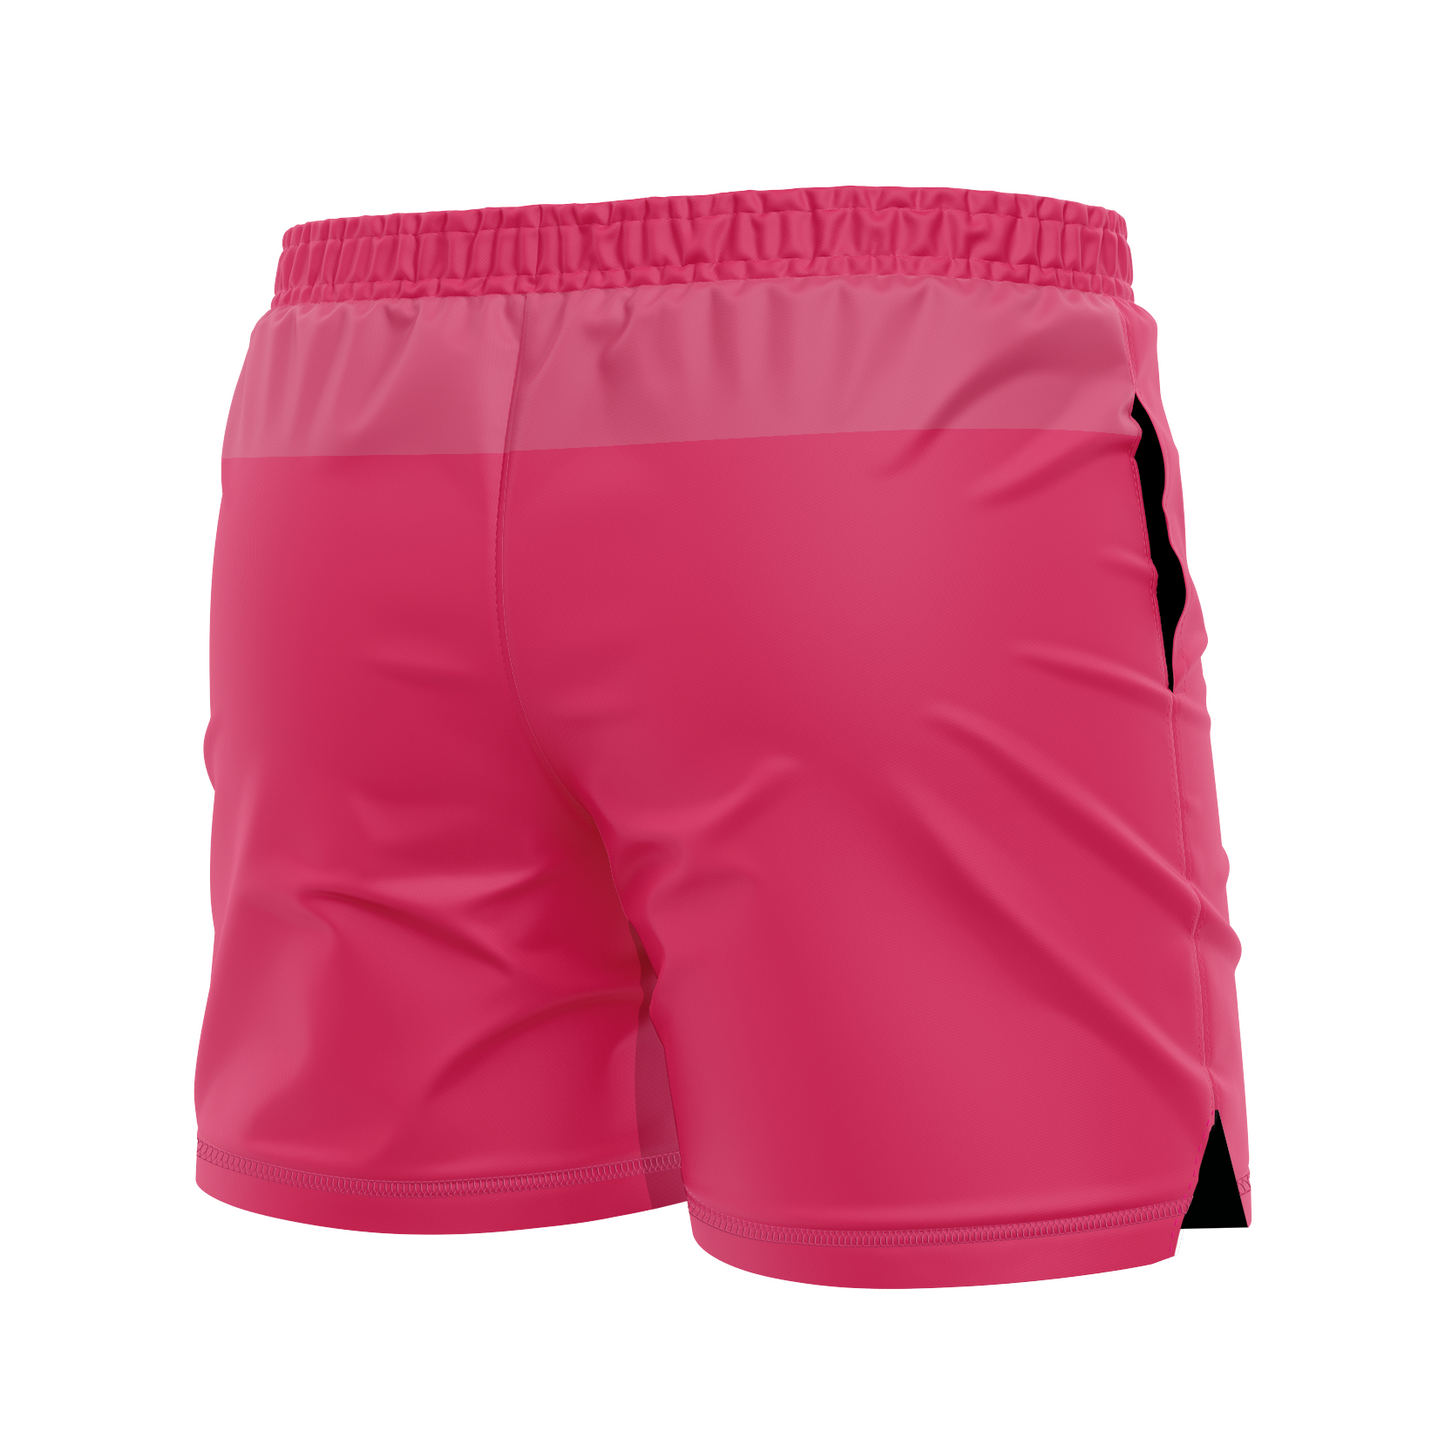 Death by Wristlock: Acid Rodeo men's FC shorts, pink